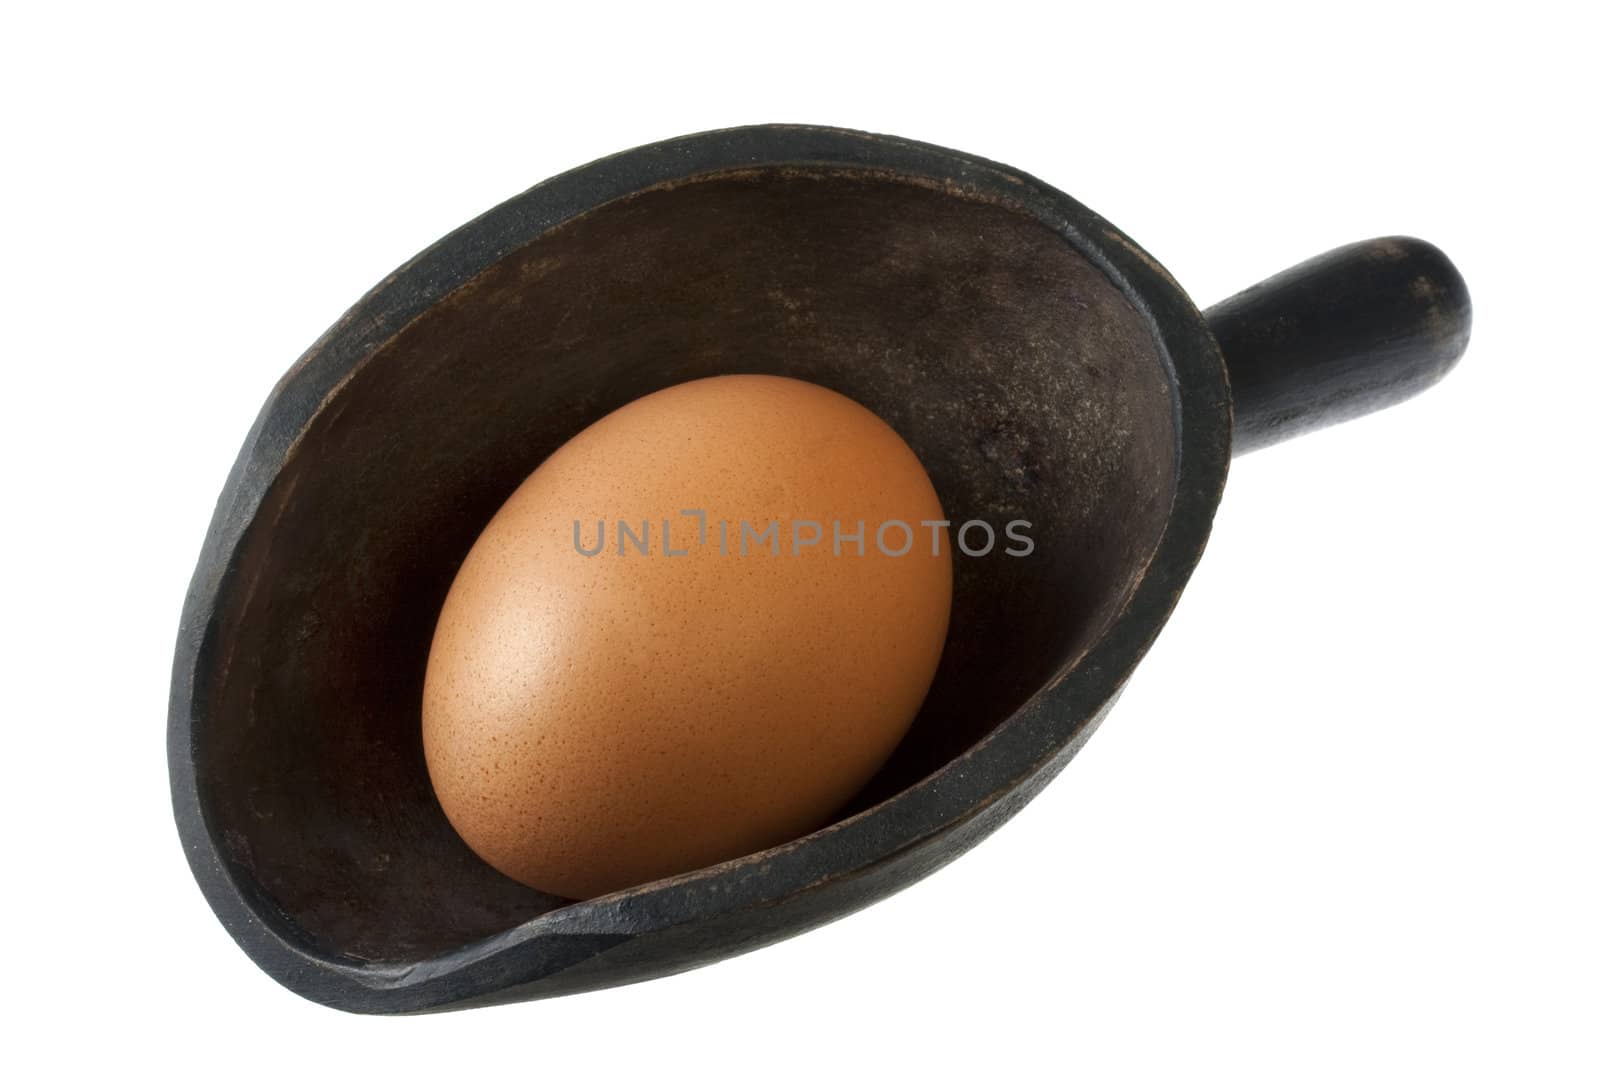 chicken egg and scoop by PixelsAway